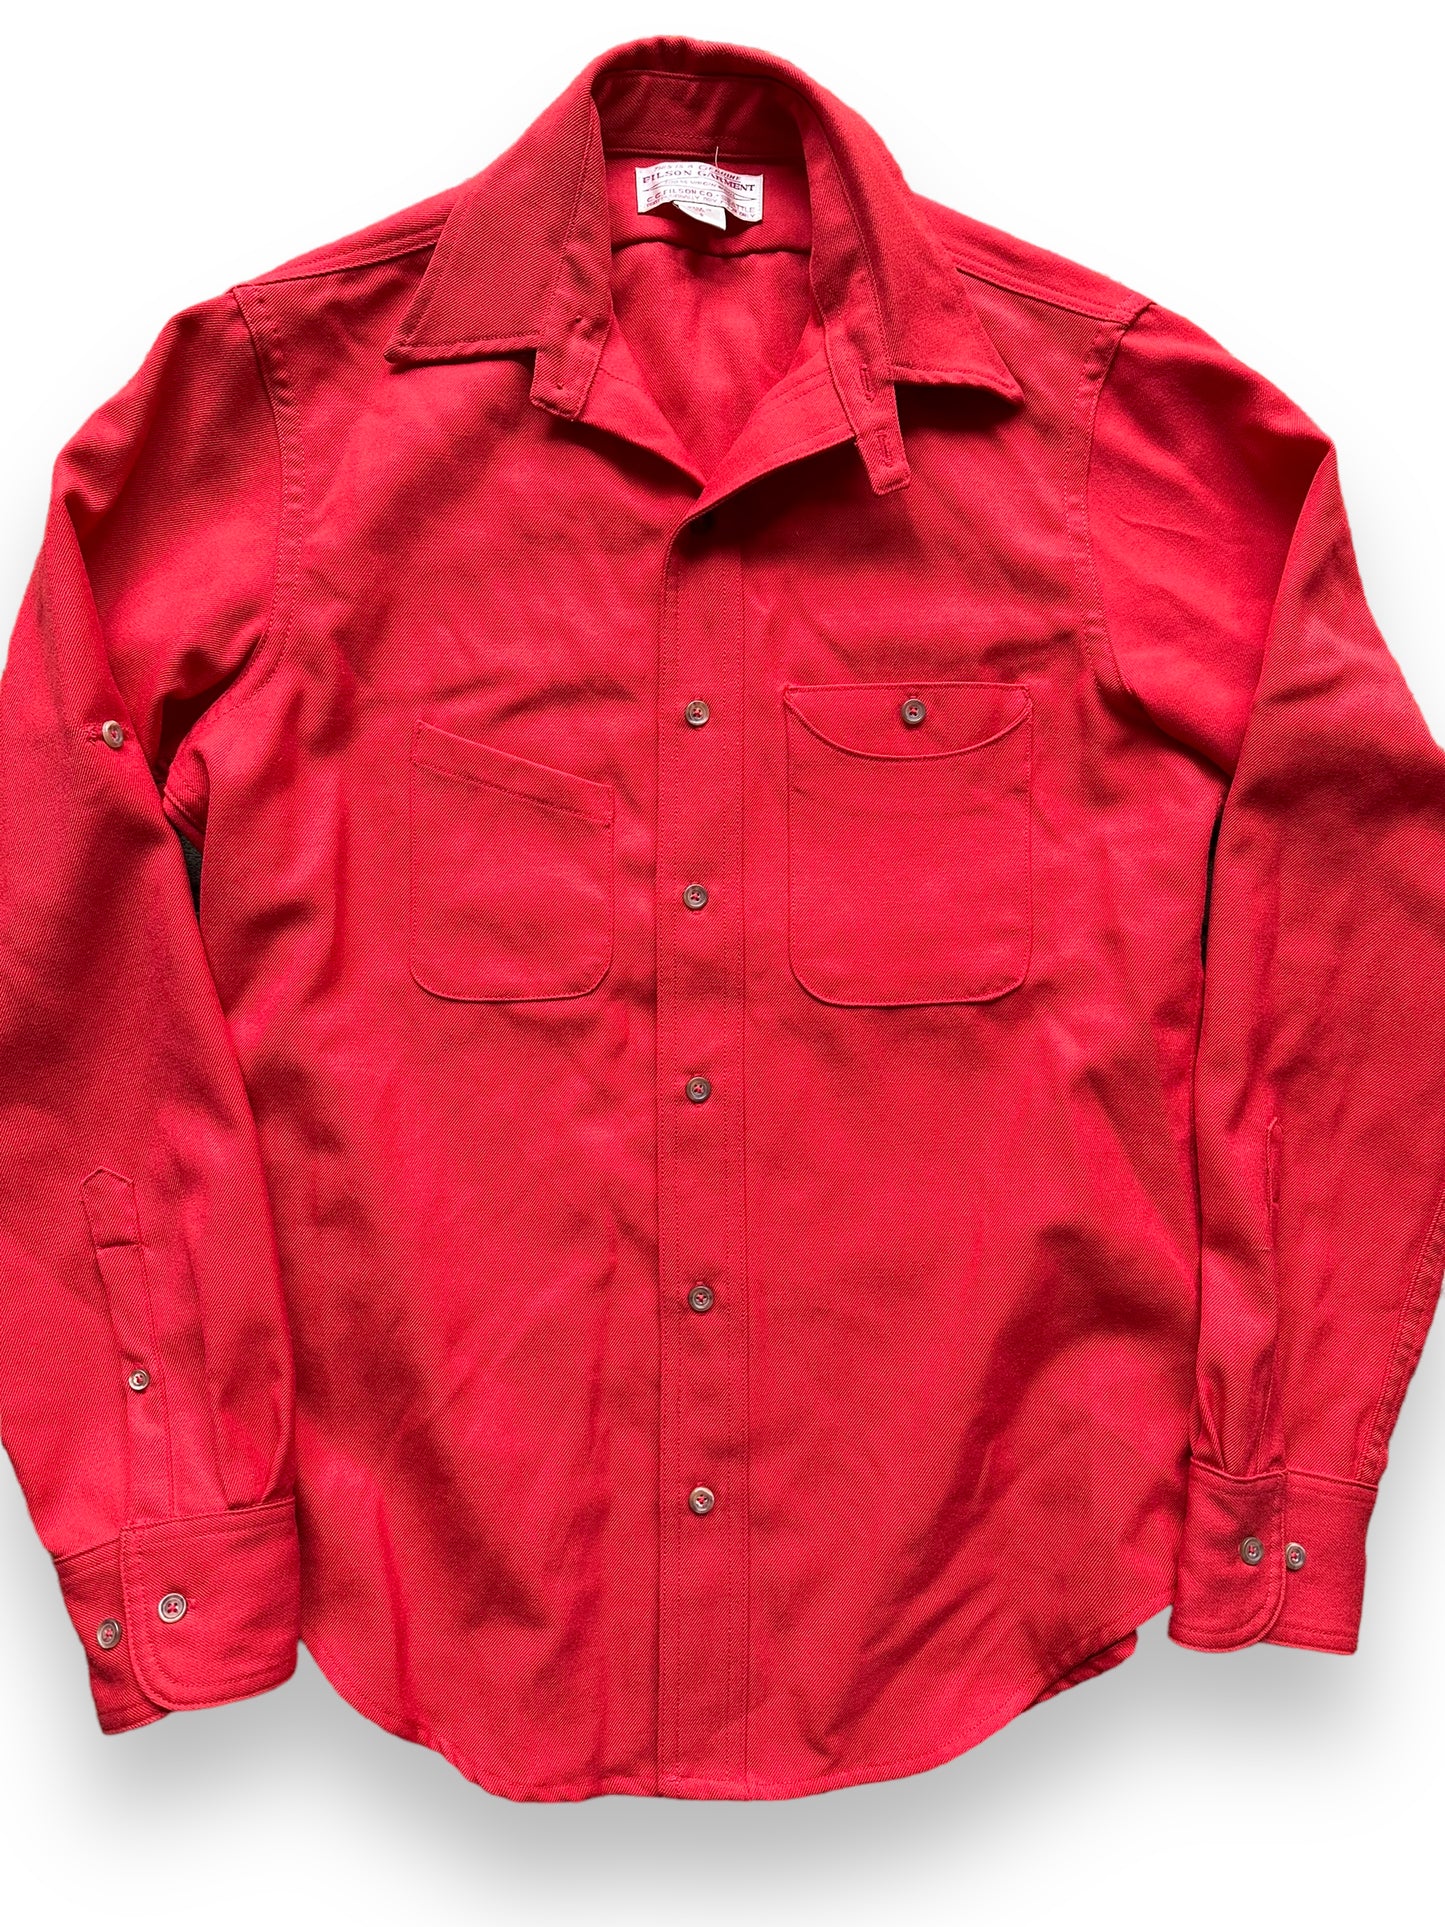 Front Detail of Filson Merino Wool Red Scout Shirt |  Barn Owl Vintage Goods | Vintage Filson Workwear Seattle